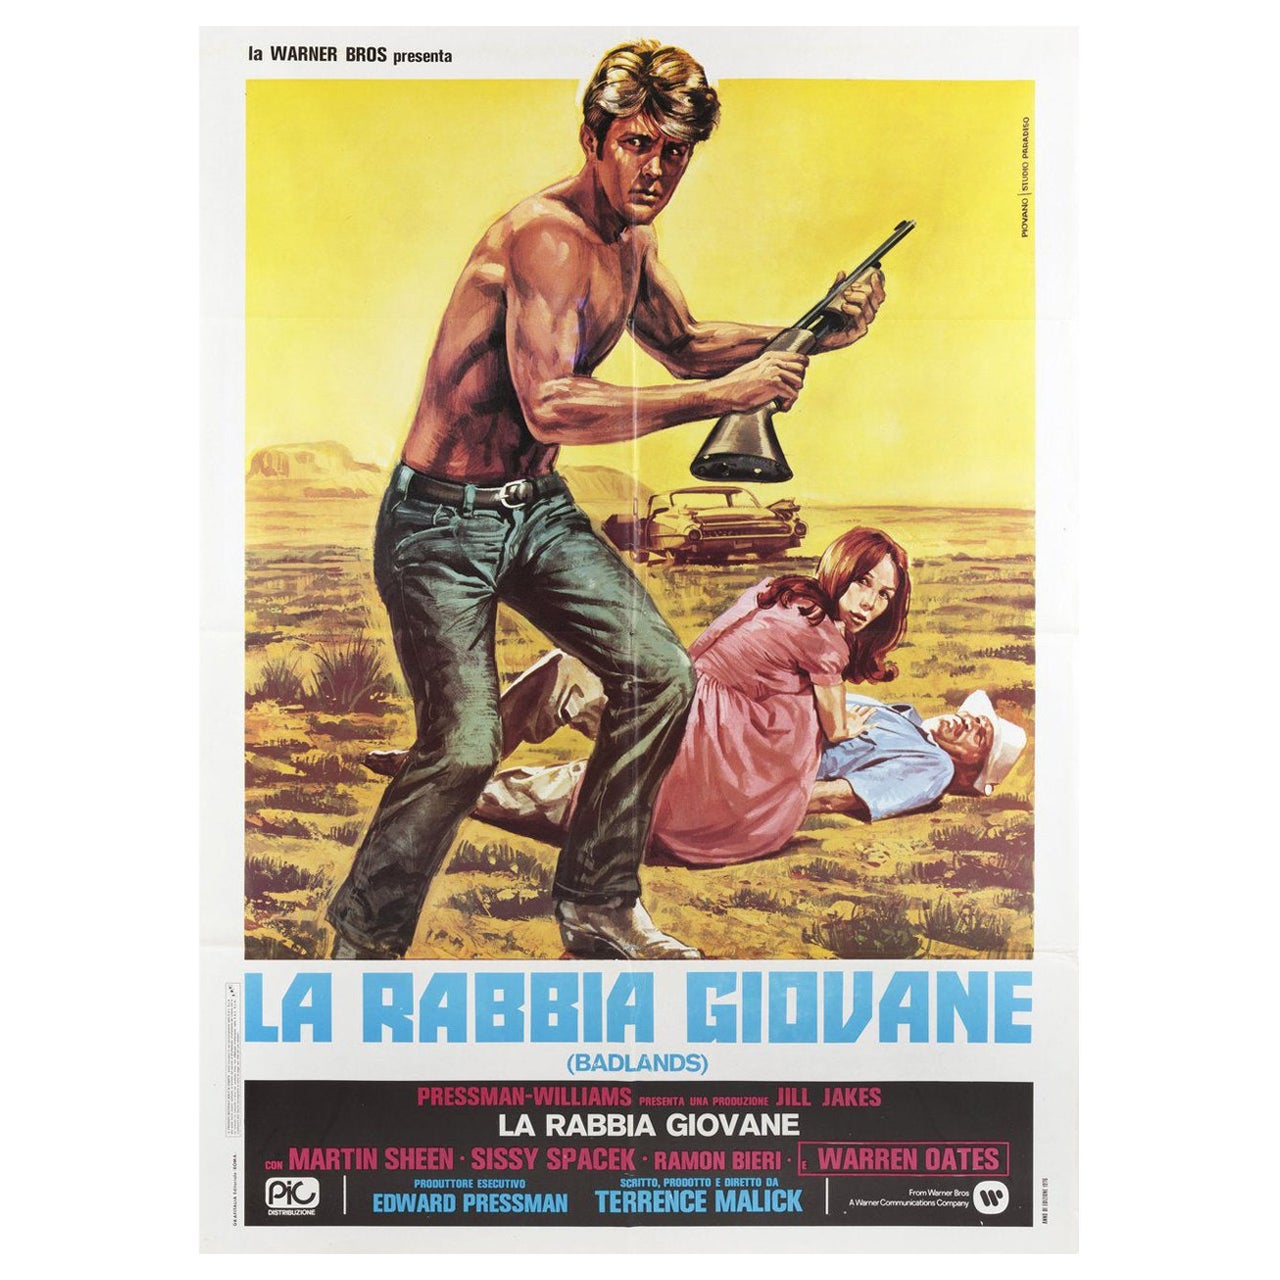 Badlands 1976 Italian Due Fogli Film Poster